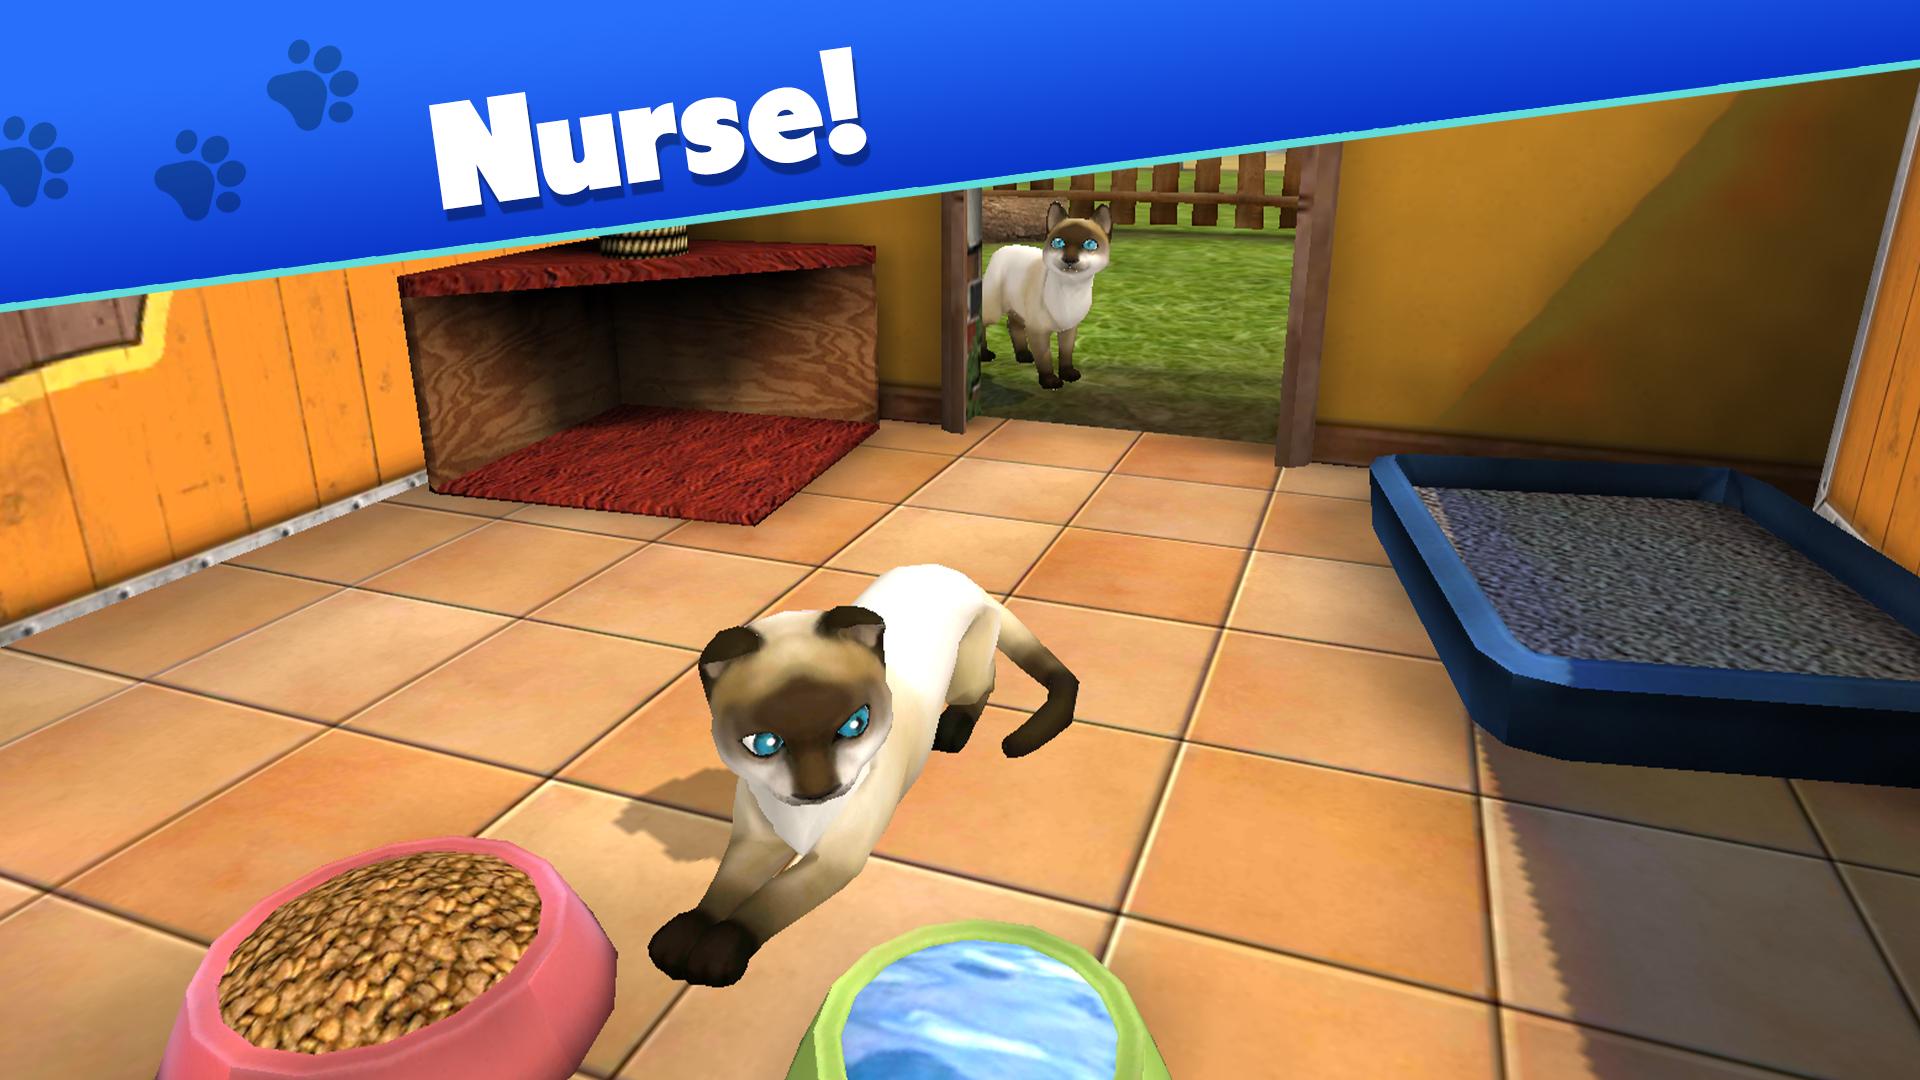 Android application Pet World - My animal shelter screenshort